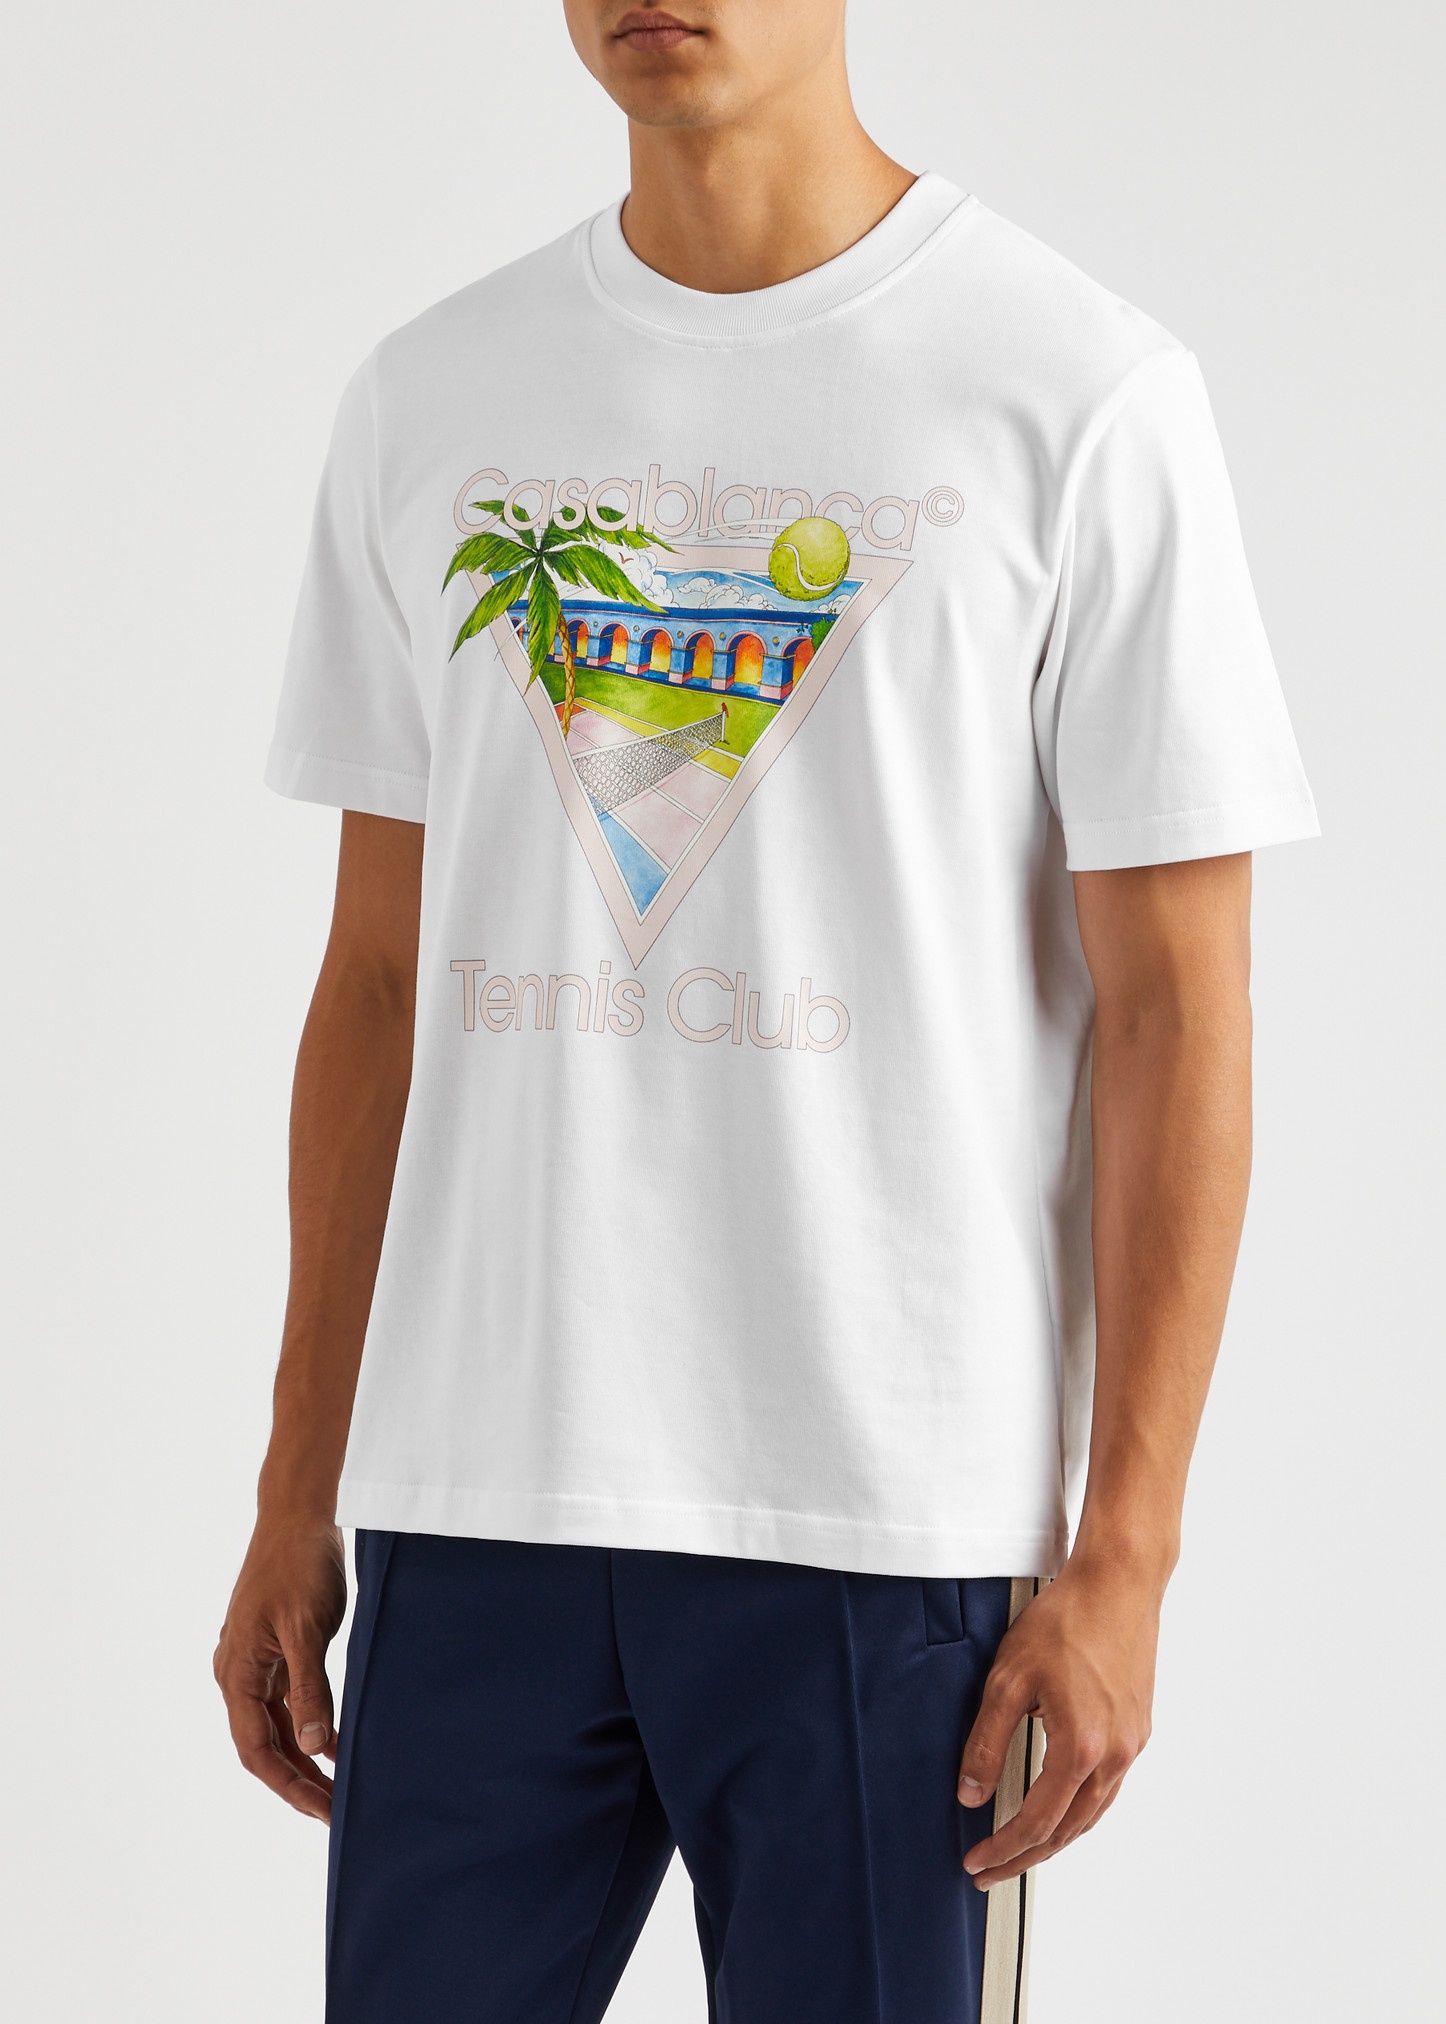 Tennis Club printed cotton T-shirt - 2